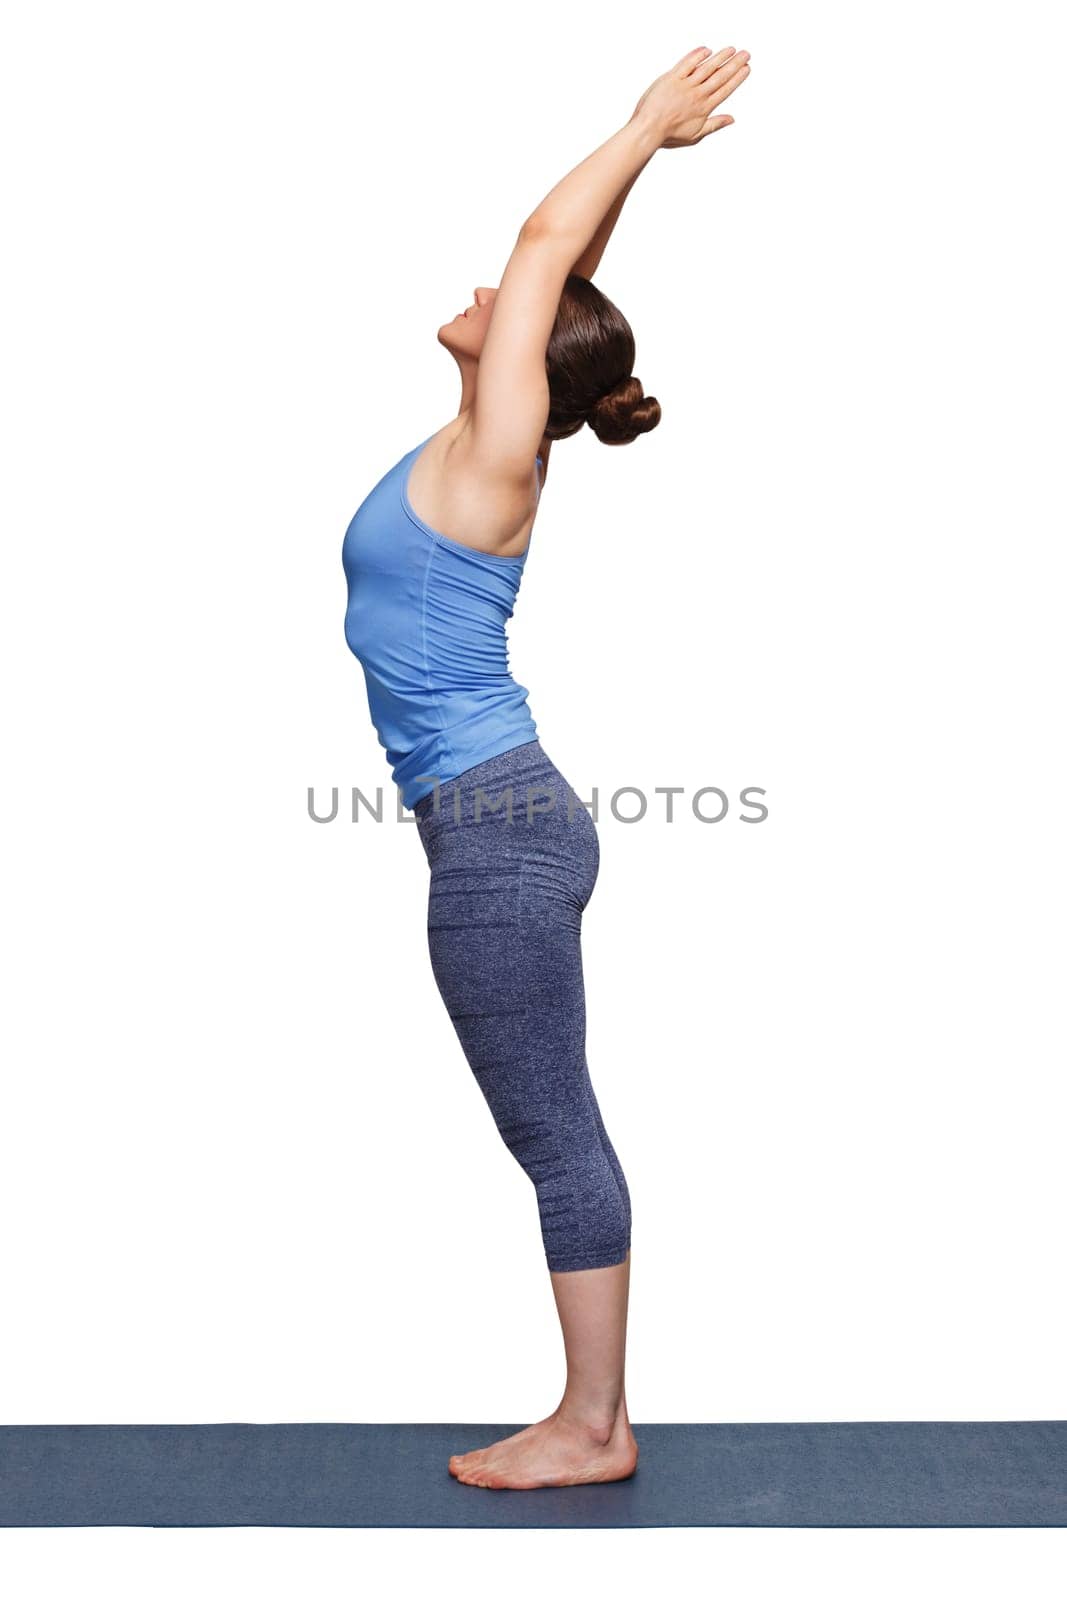 Woman doing Hatha Yoga asana Tadasana by dimol